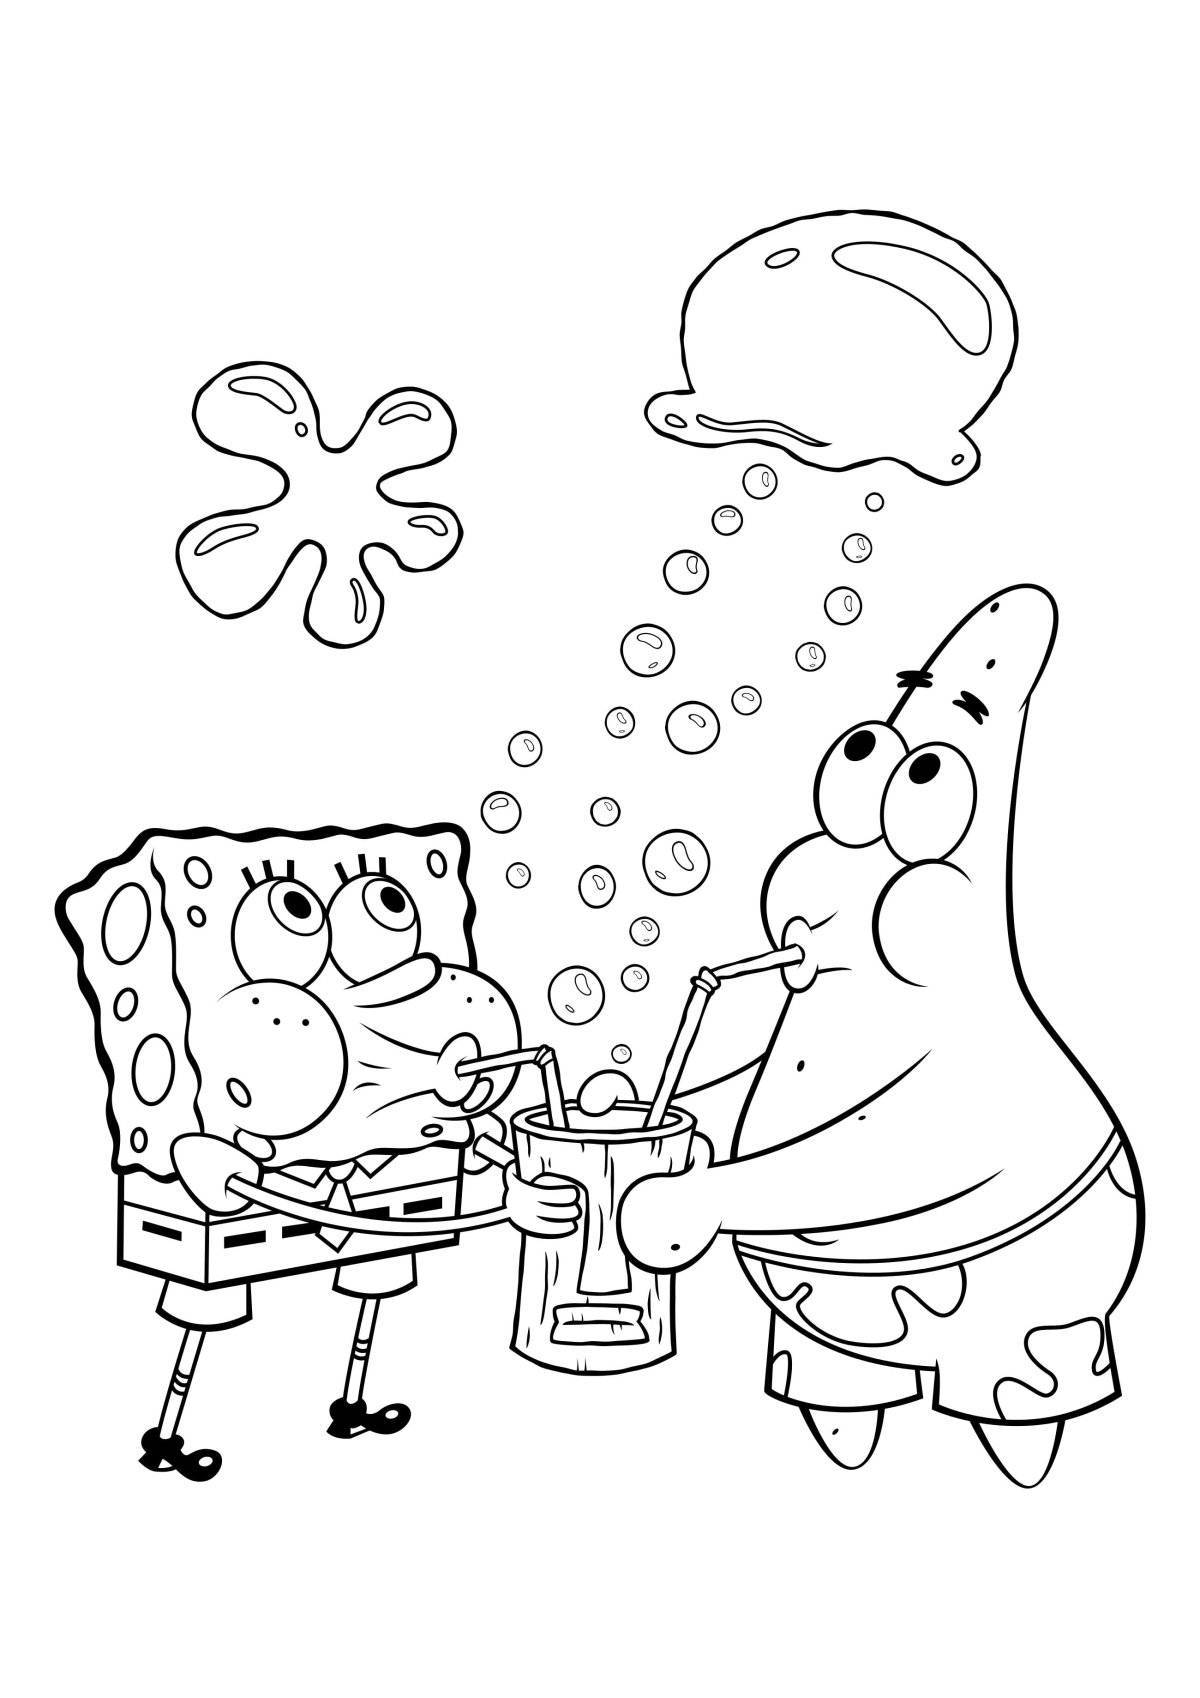 Spongebob and friends #1